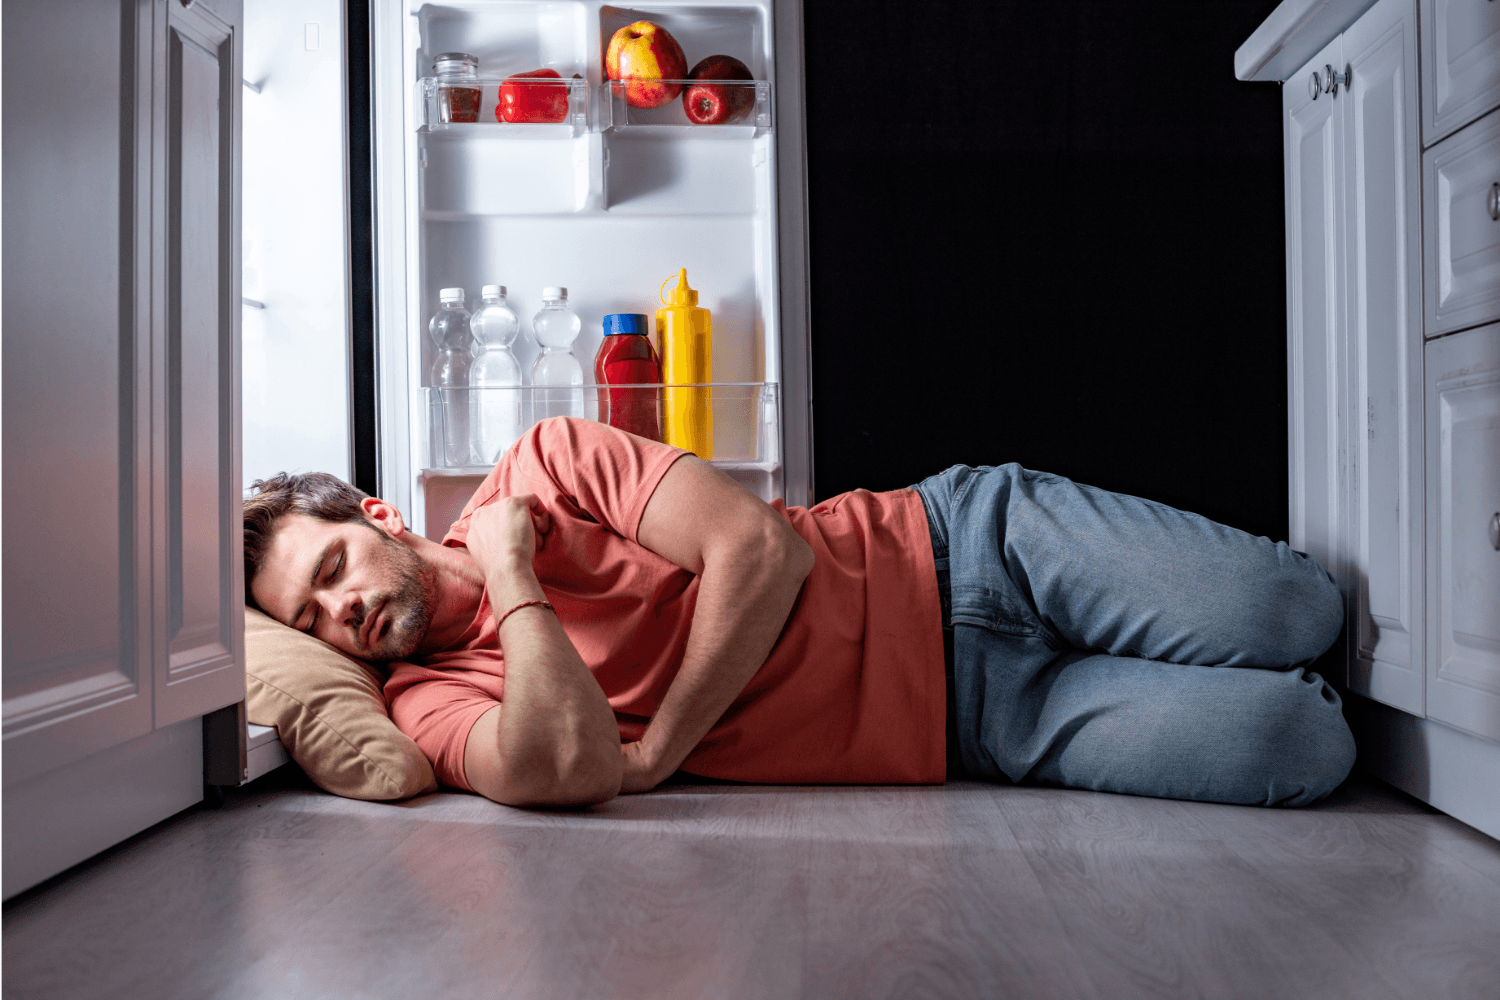 Man sleeping near fridge because they're too hot